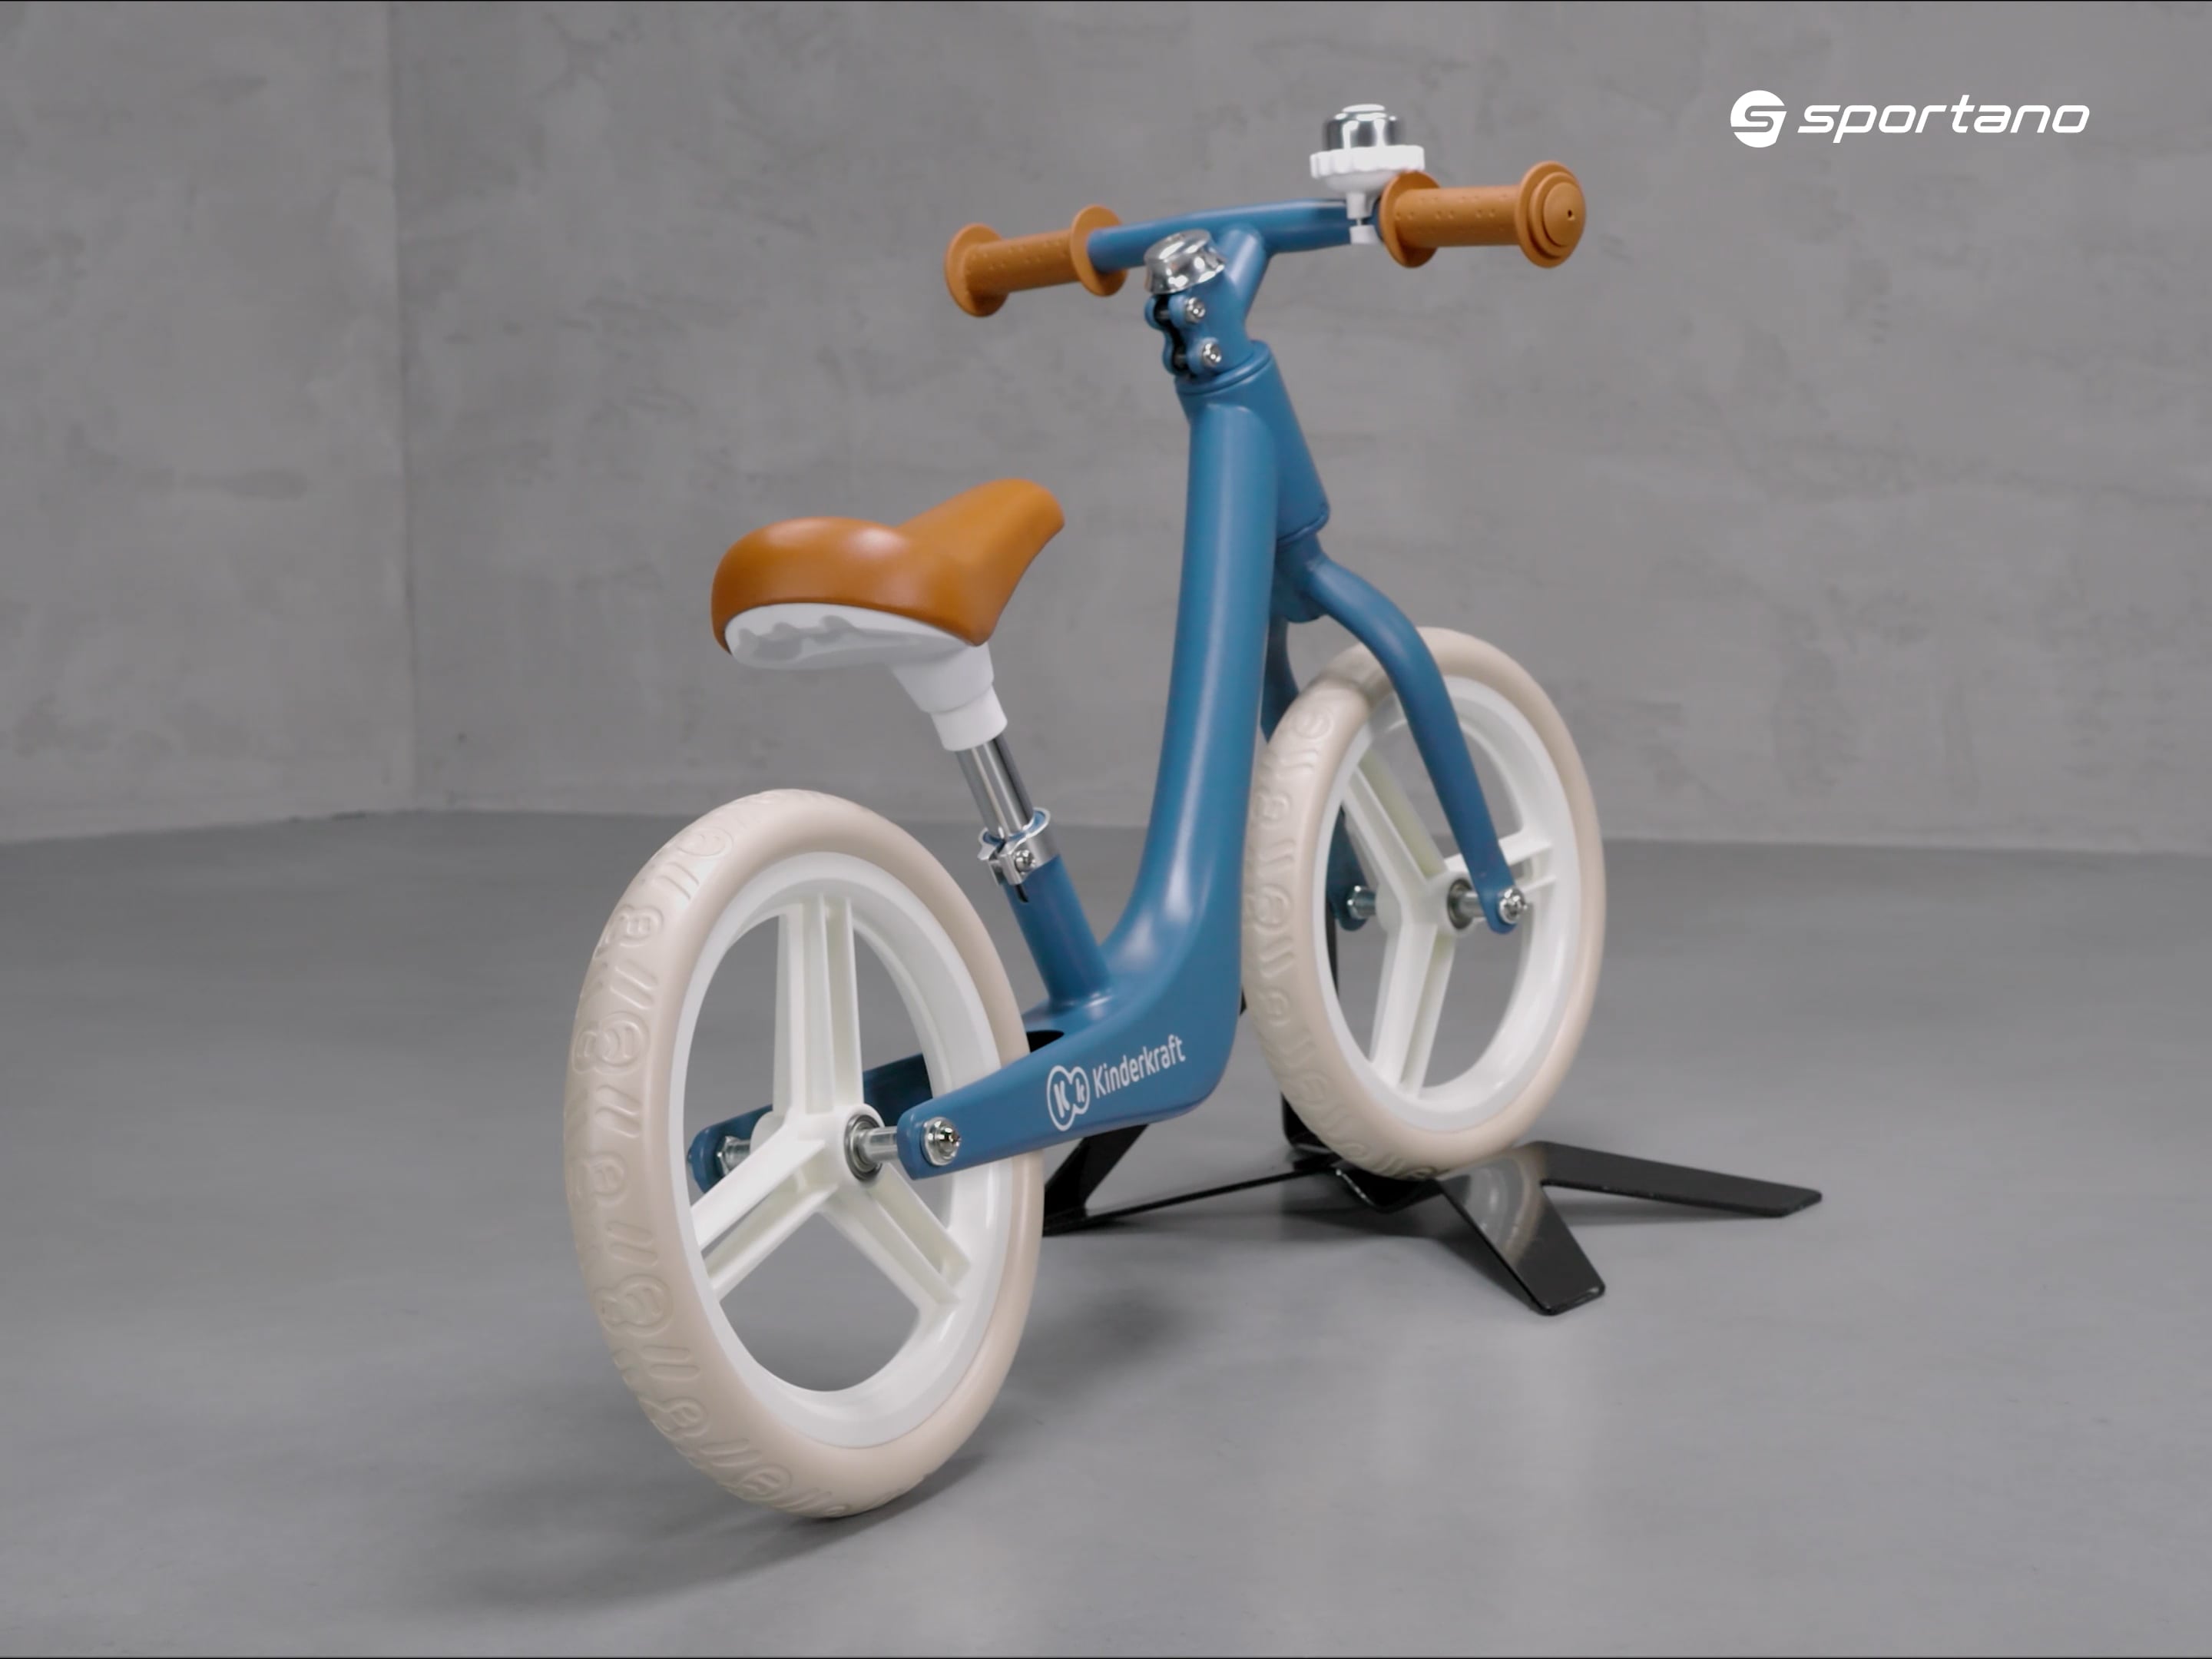 Bicicletta da fondo Kinderkraft Fly Plus blu